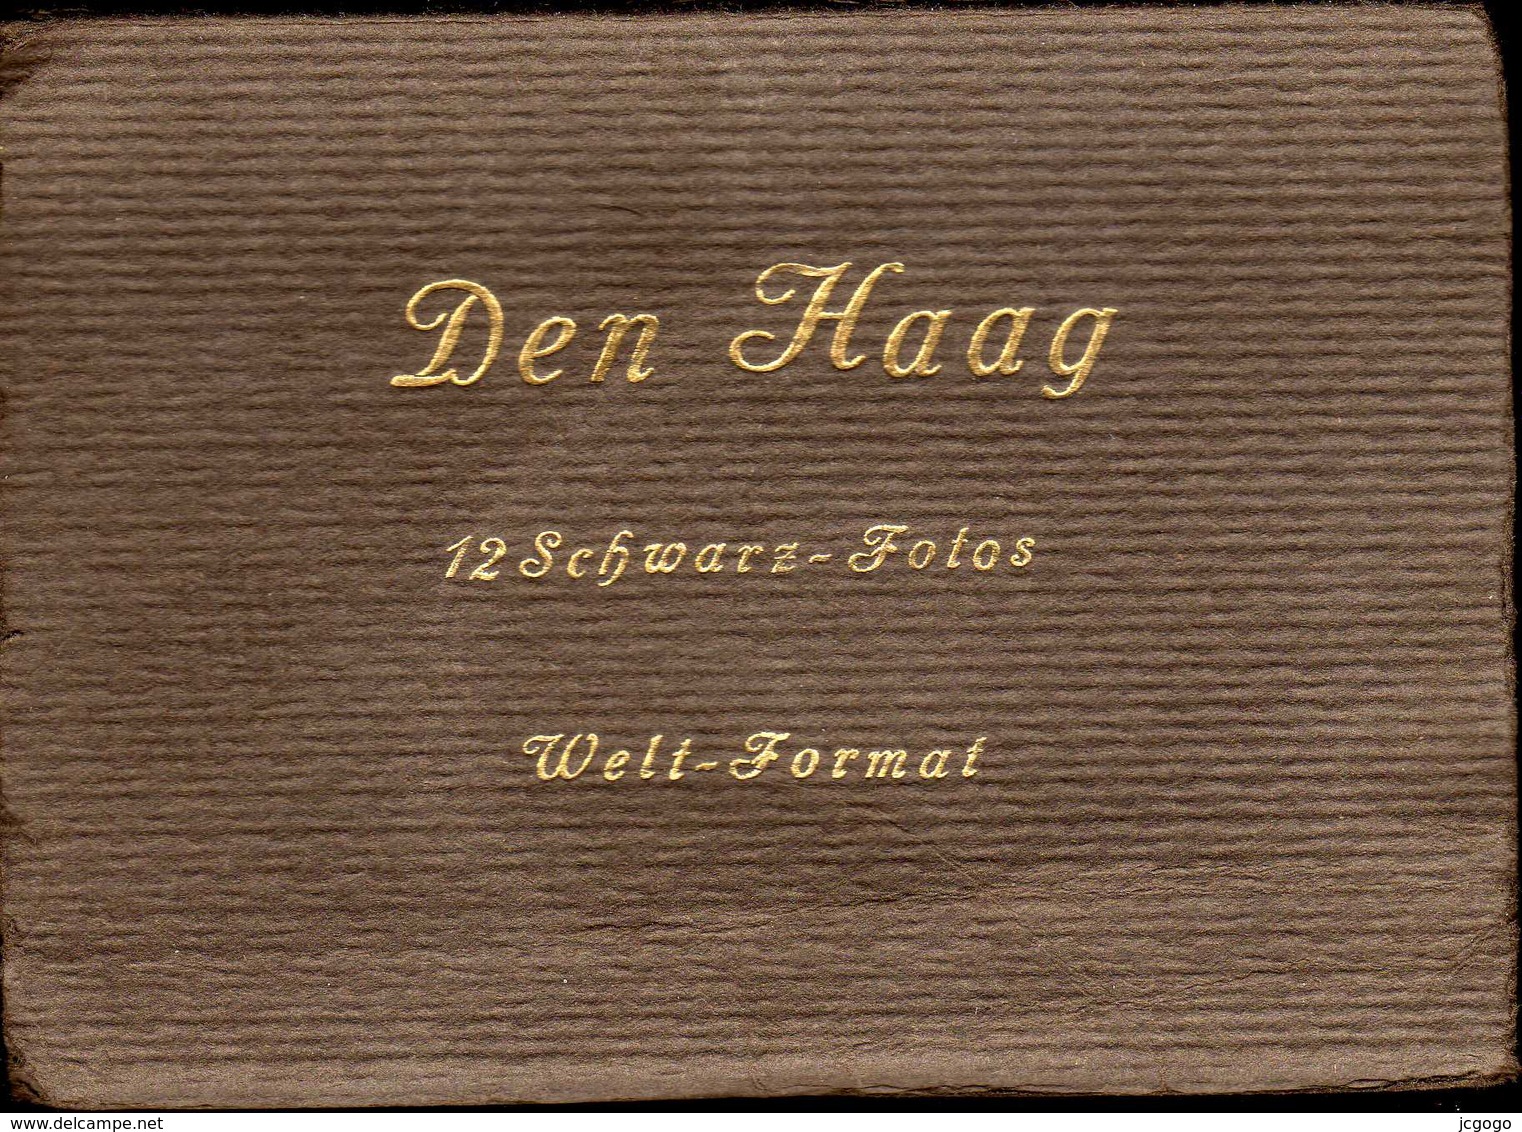 PAYS-BAS   DEN HAAG  12 Schwartz-Fotos Welt-Format - Lots, Séries, Collections